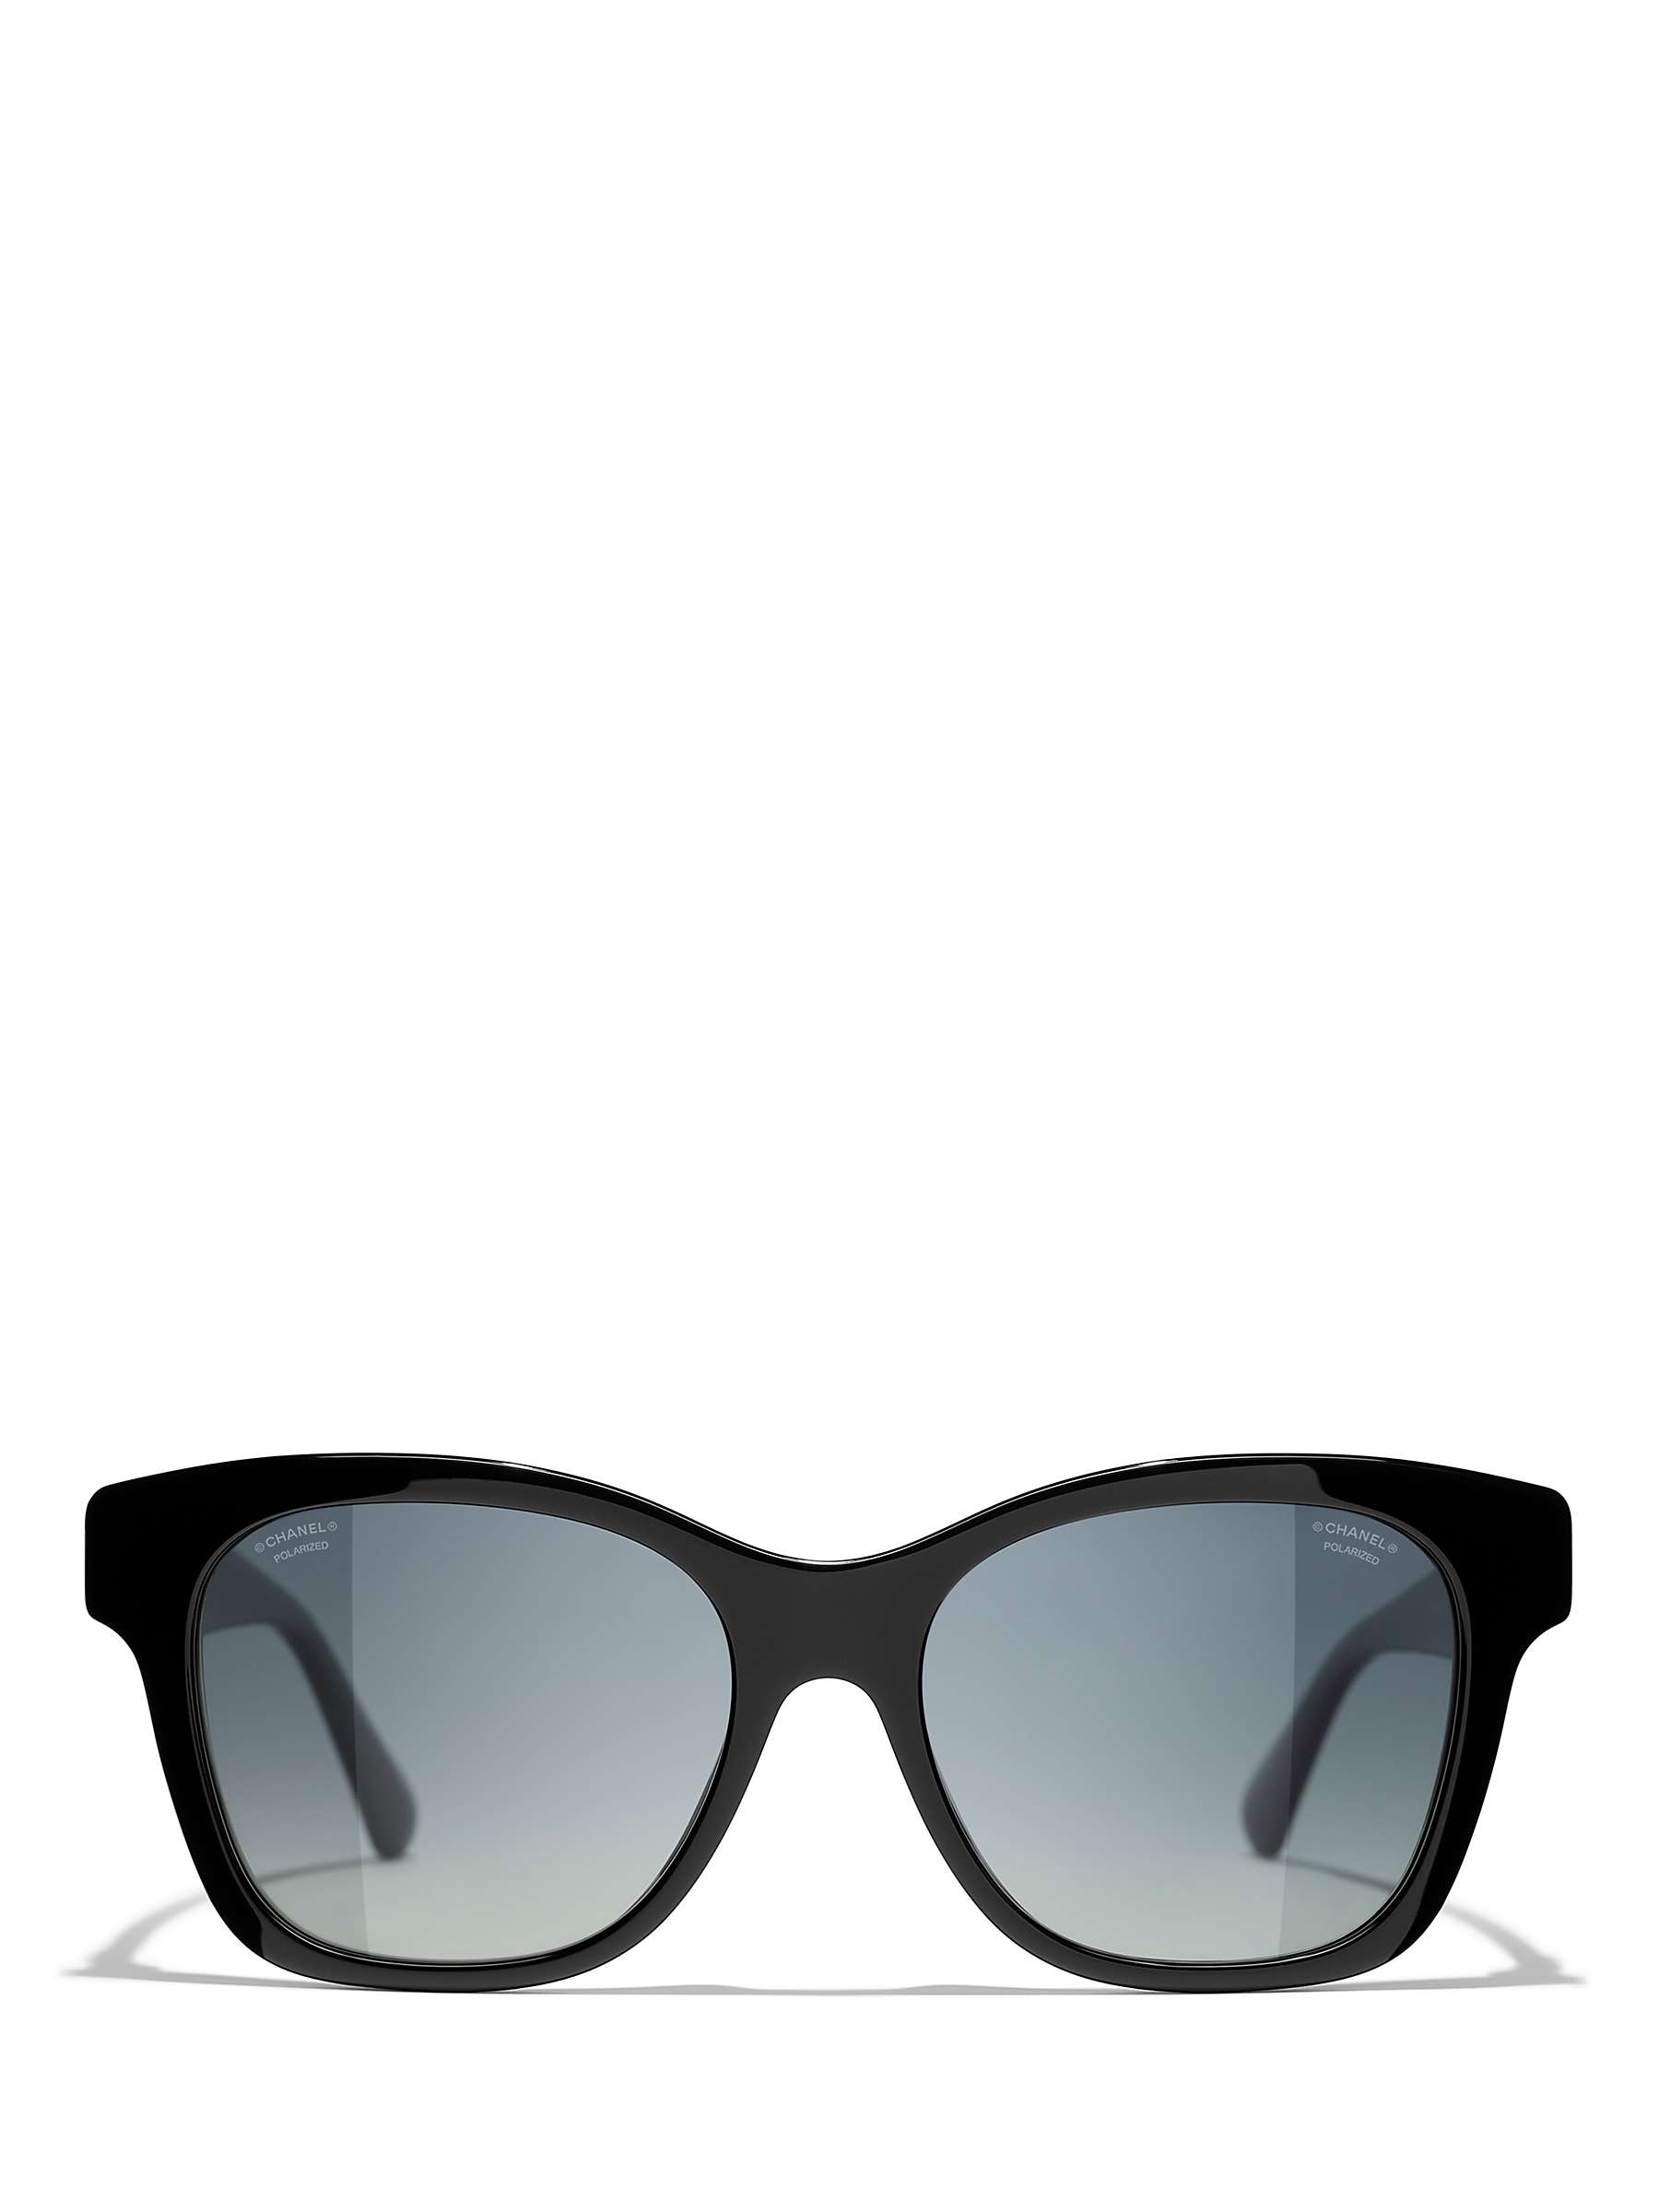 CHANEL Rectangular Sunglasses CH5482H Black/Grey Gradient at John Lewis ...